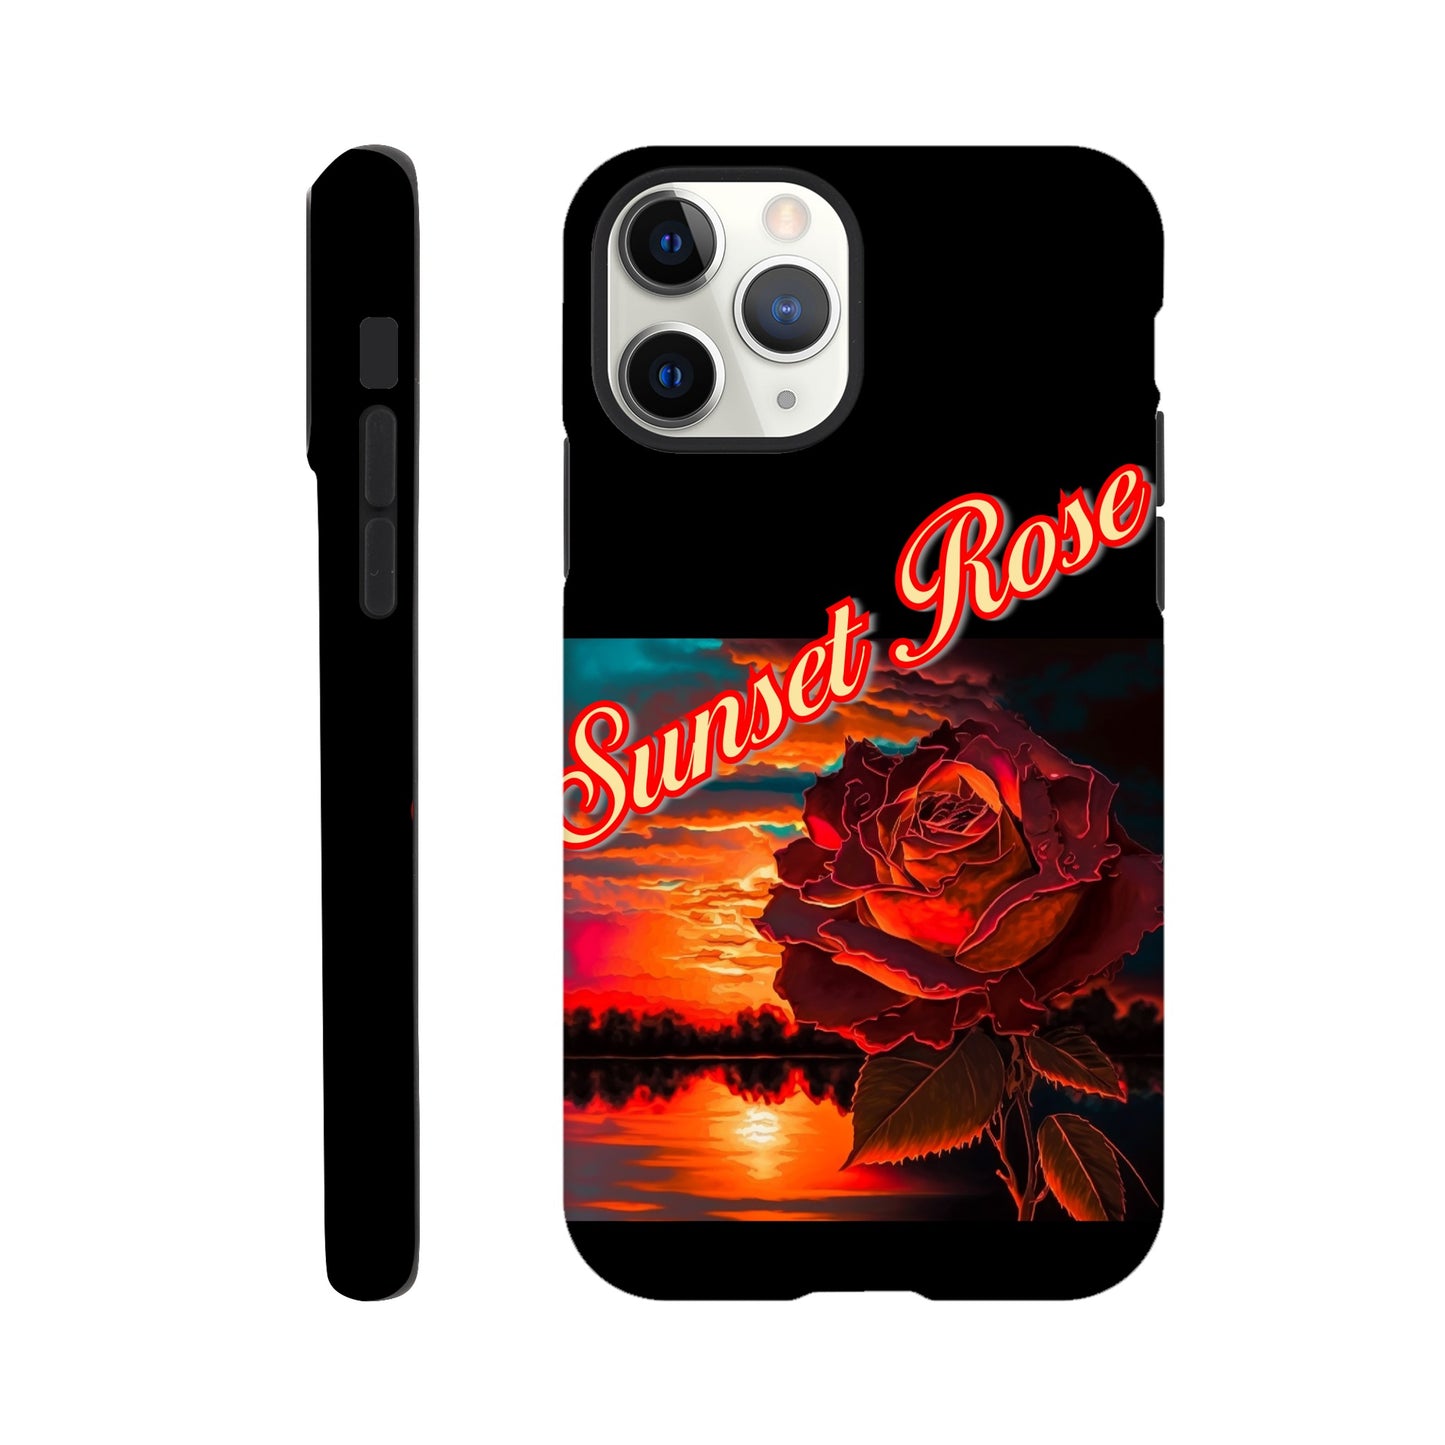 Sunset Rose Tough case